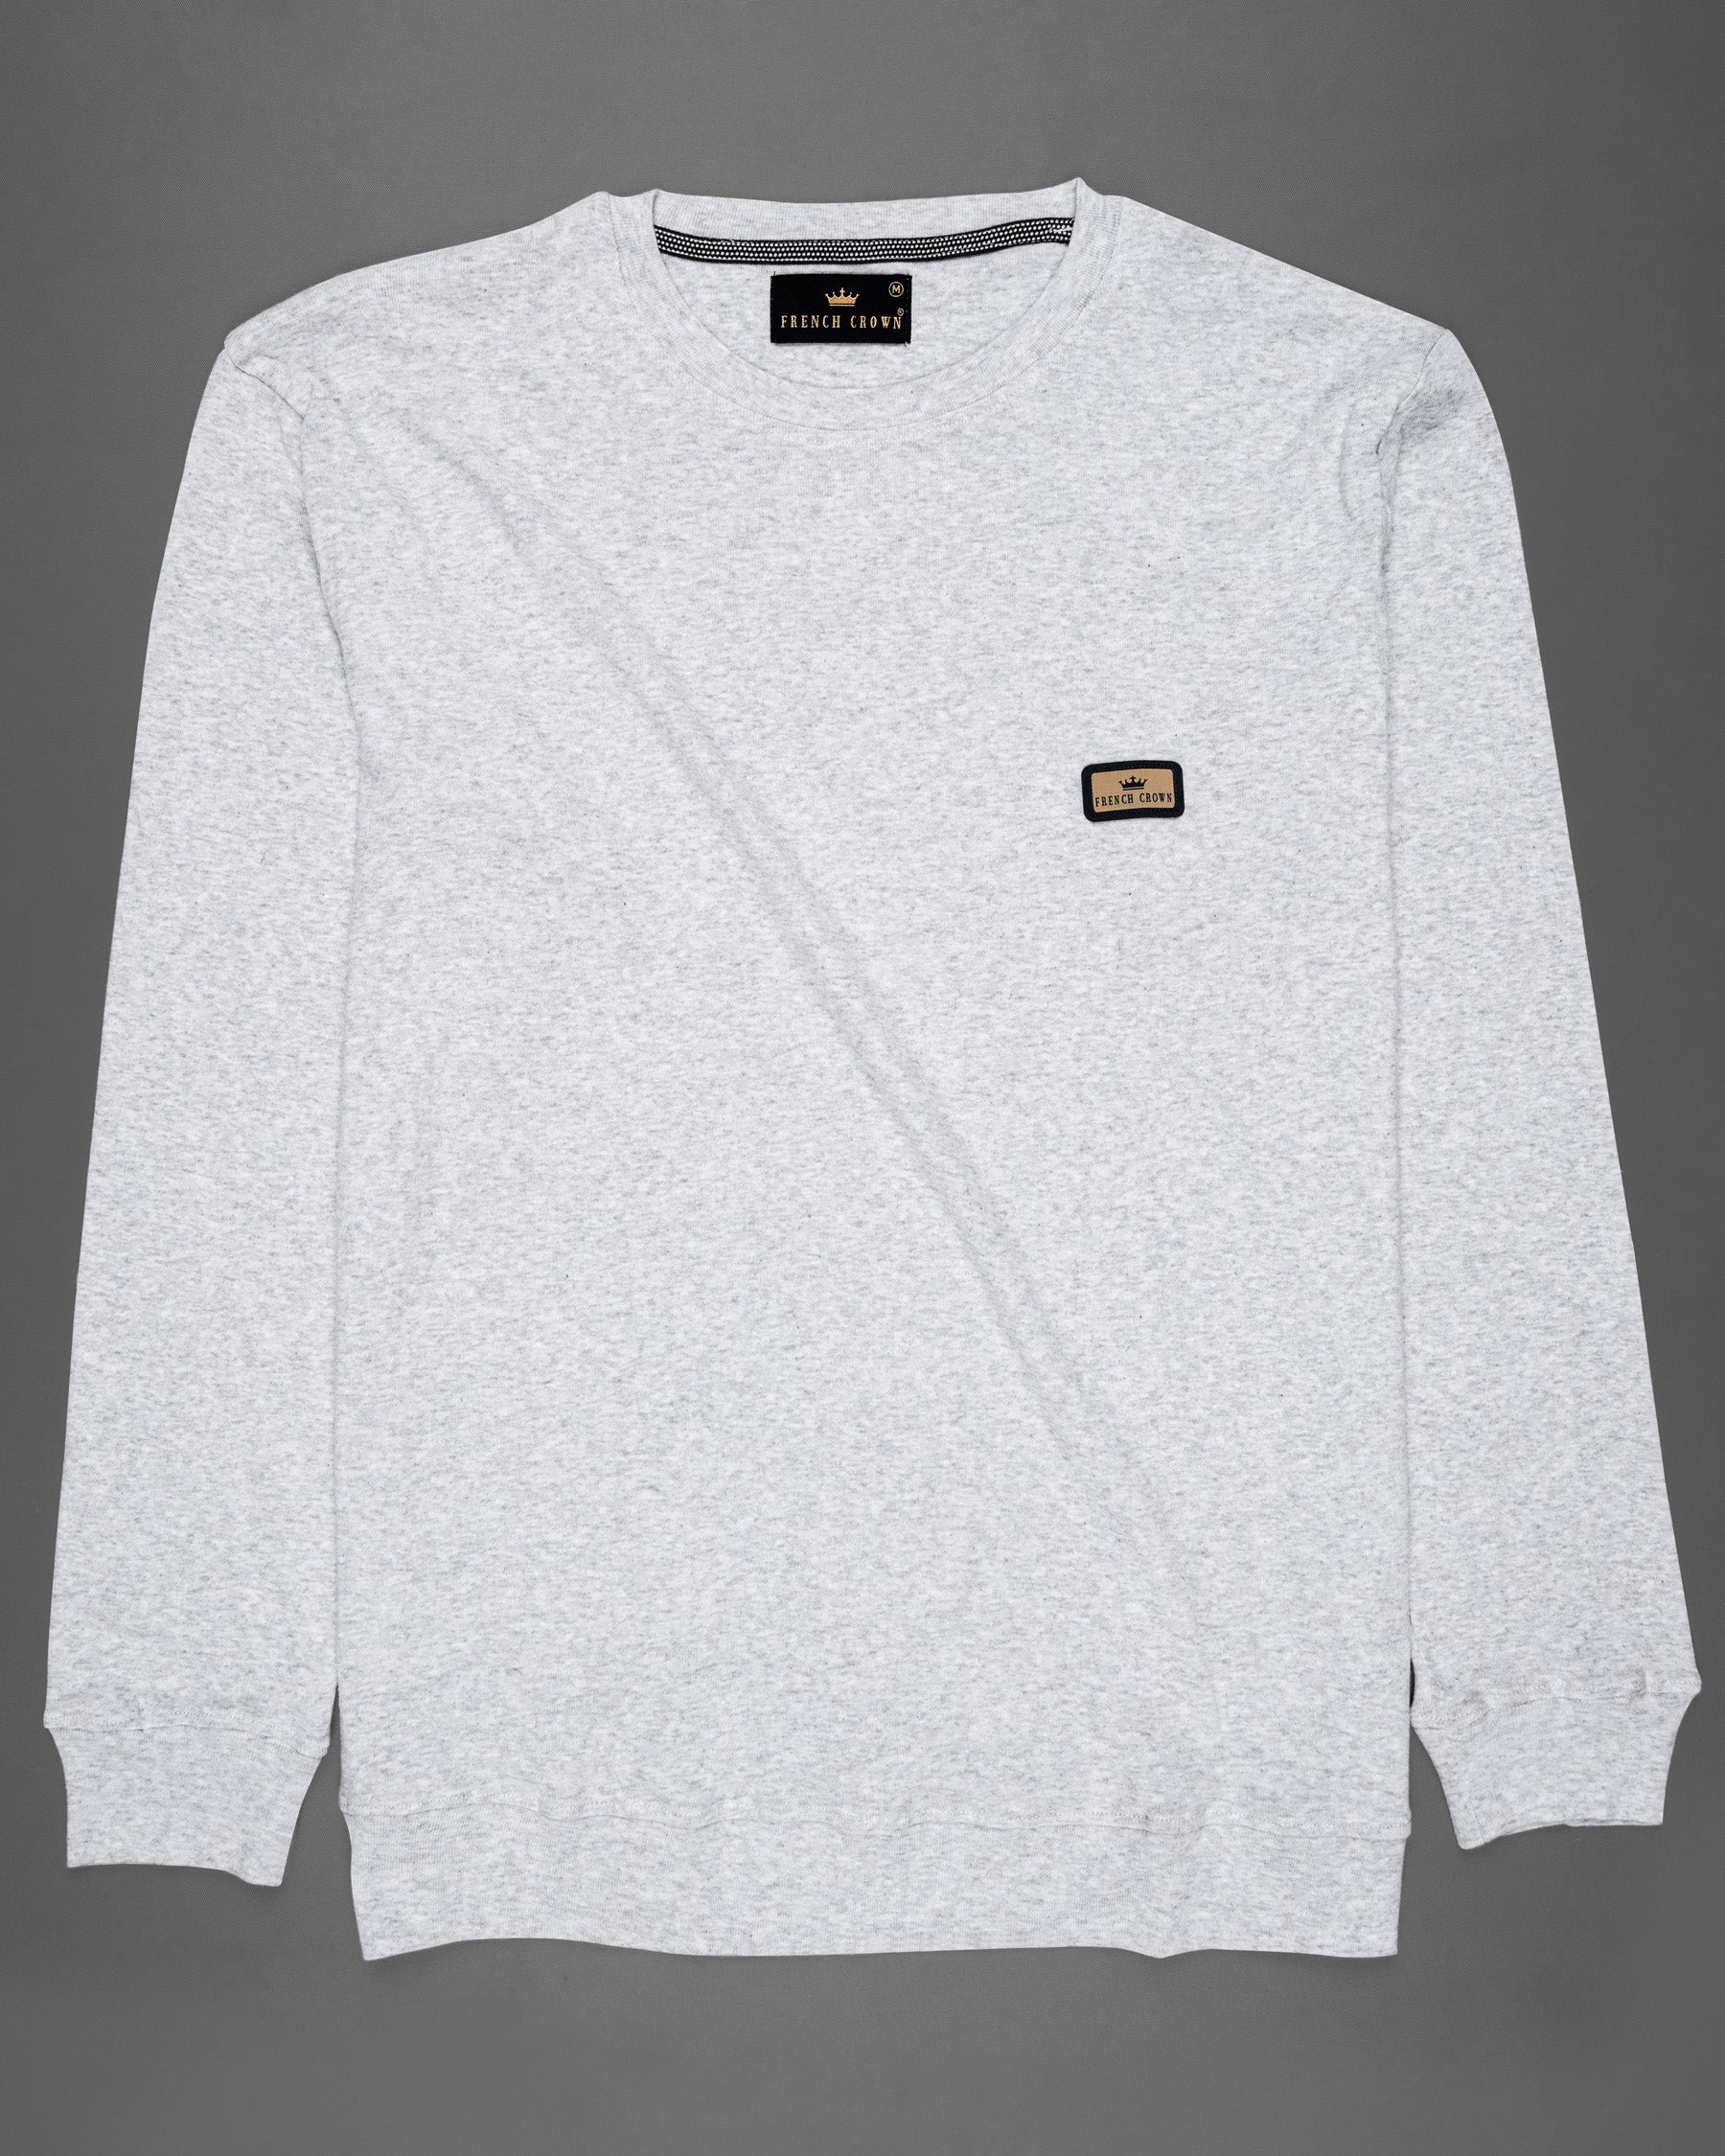 Celeste Grey Full Sleeve Premium Cotton Jersey Sweatshirt TS451-S, TS451-M, TS451-L, TS451-XL, TS451-XXL